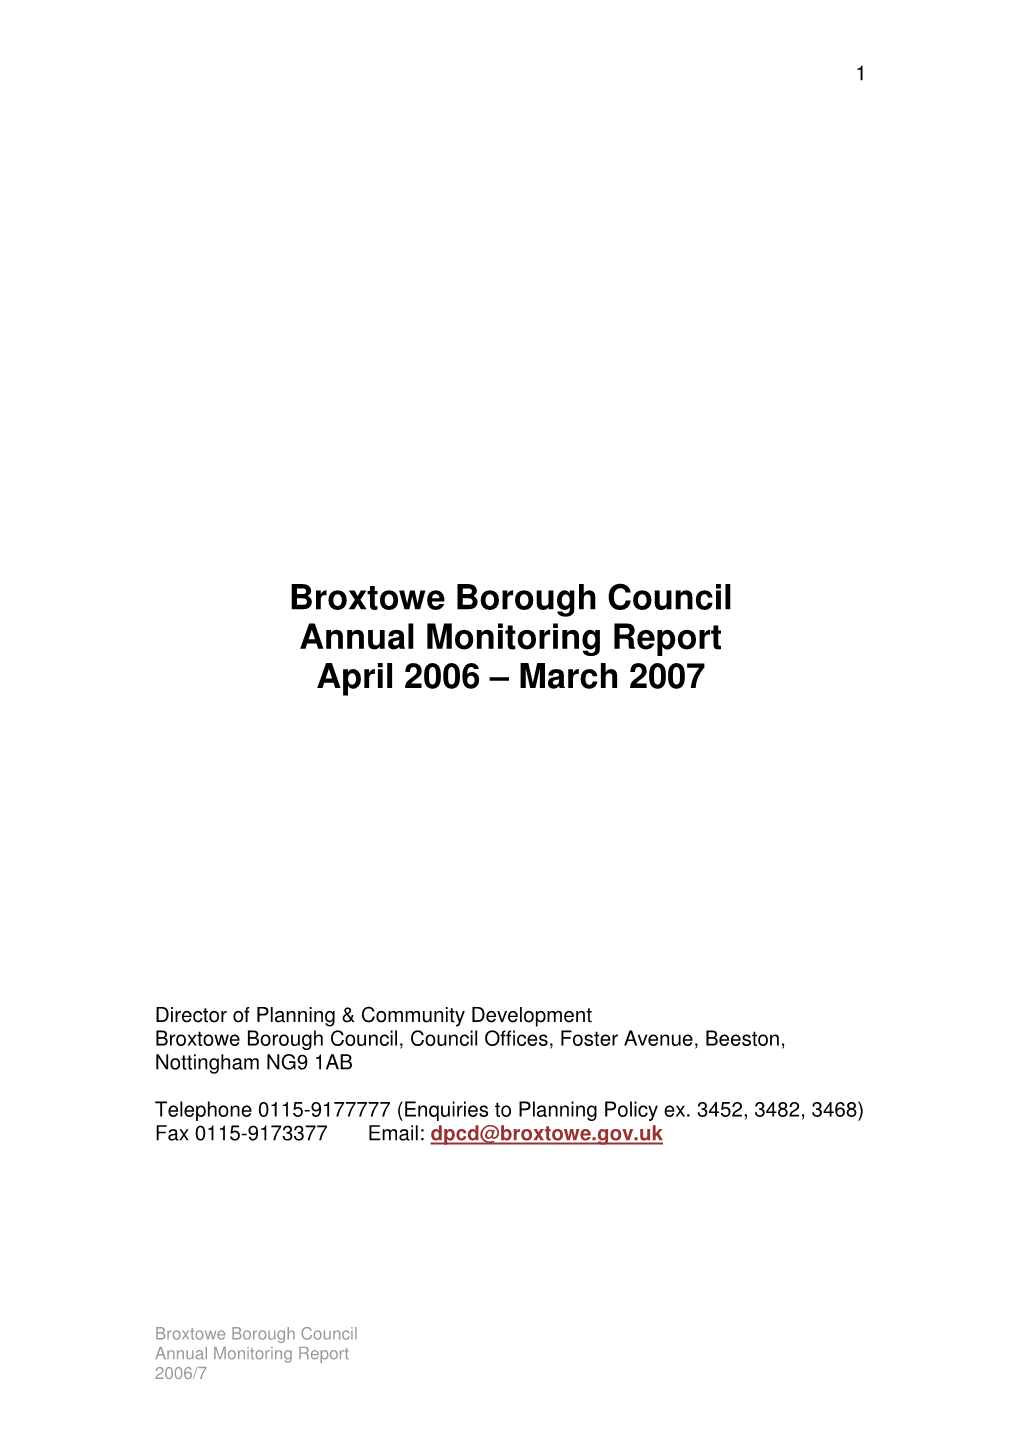 Broxtowe Borough Council Annual Monitoring Report April 2006 – March 2007